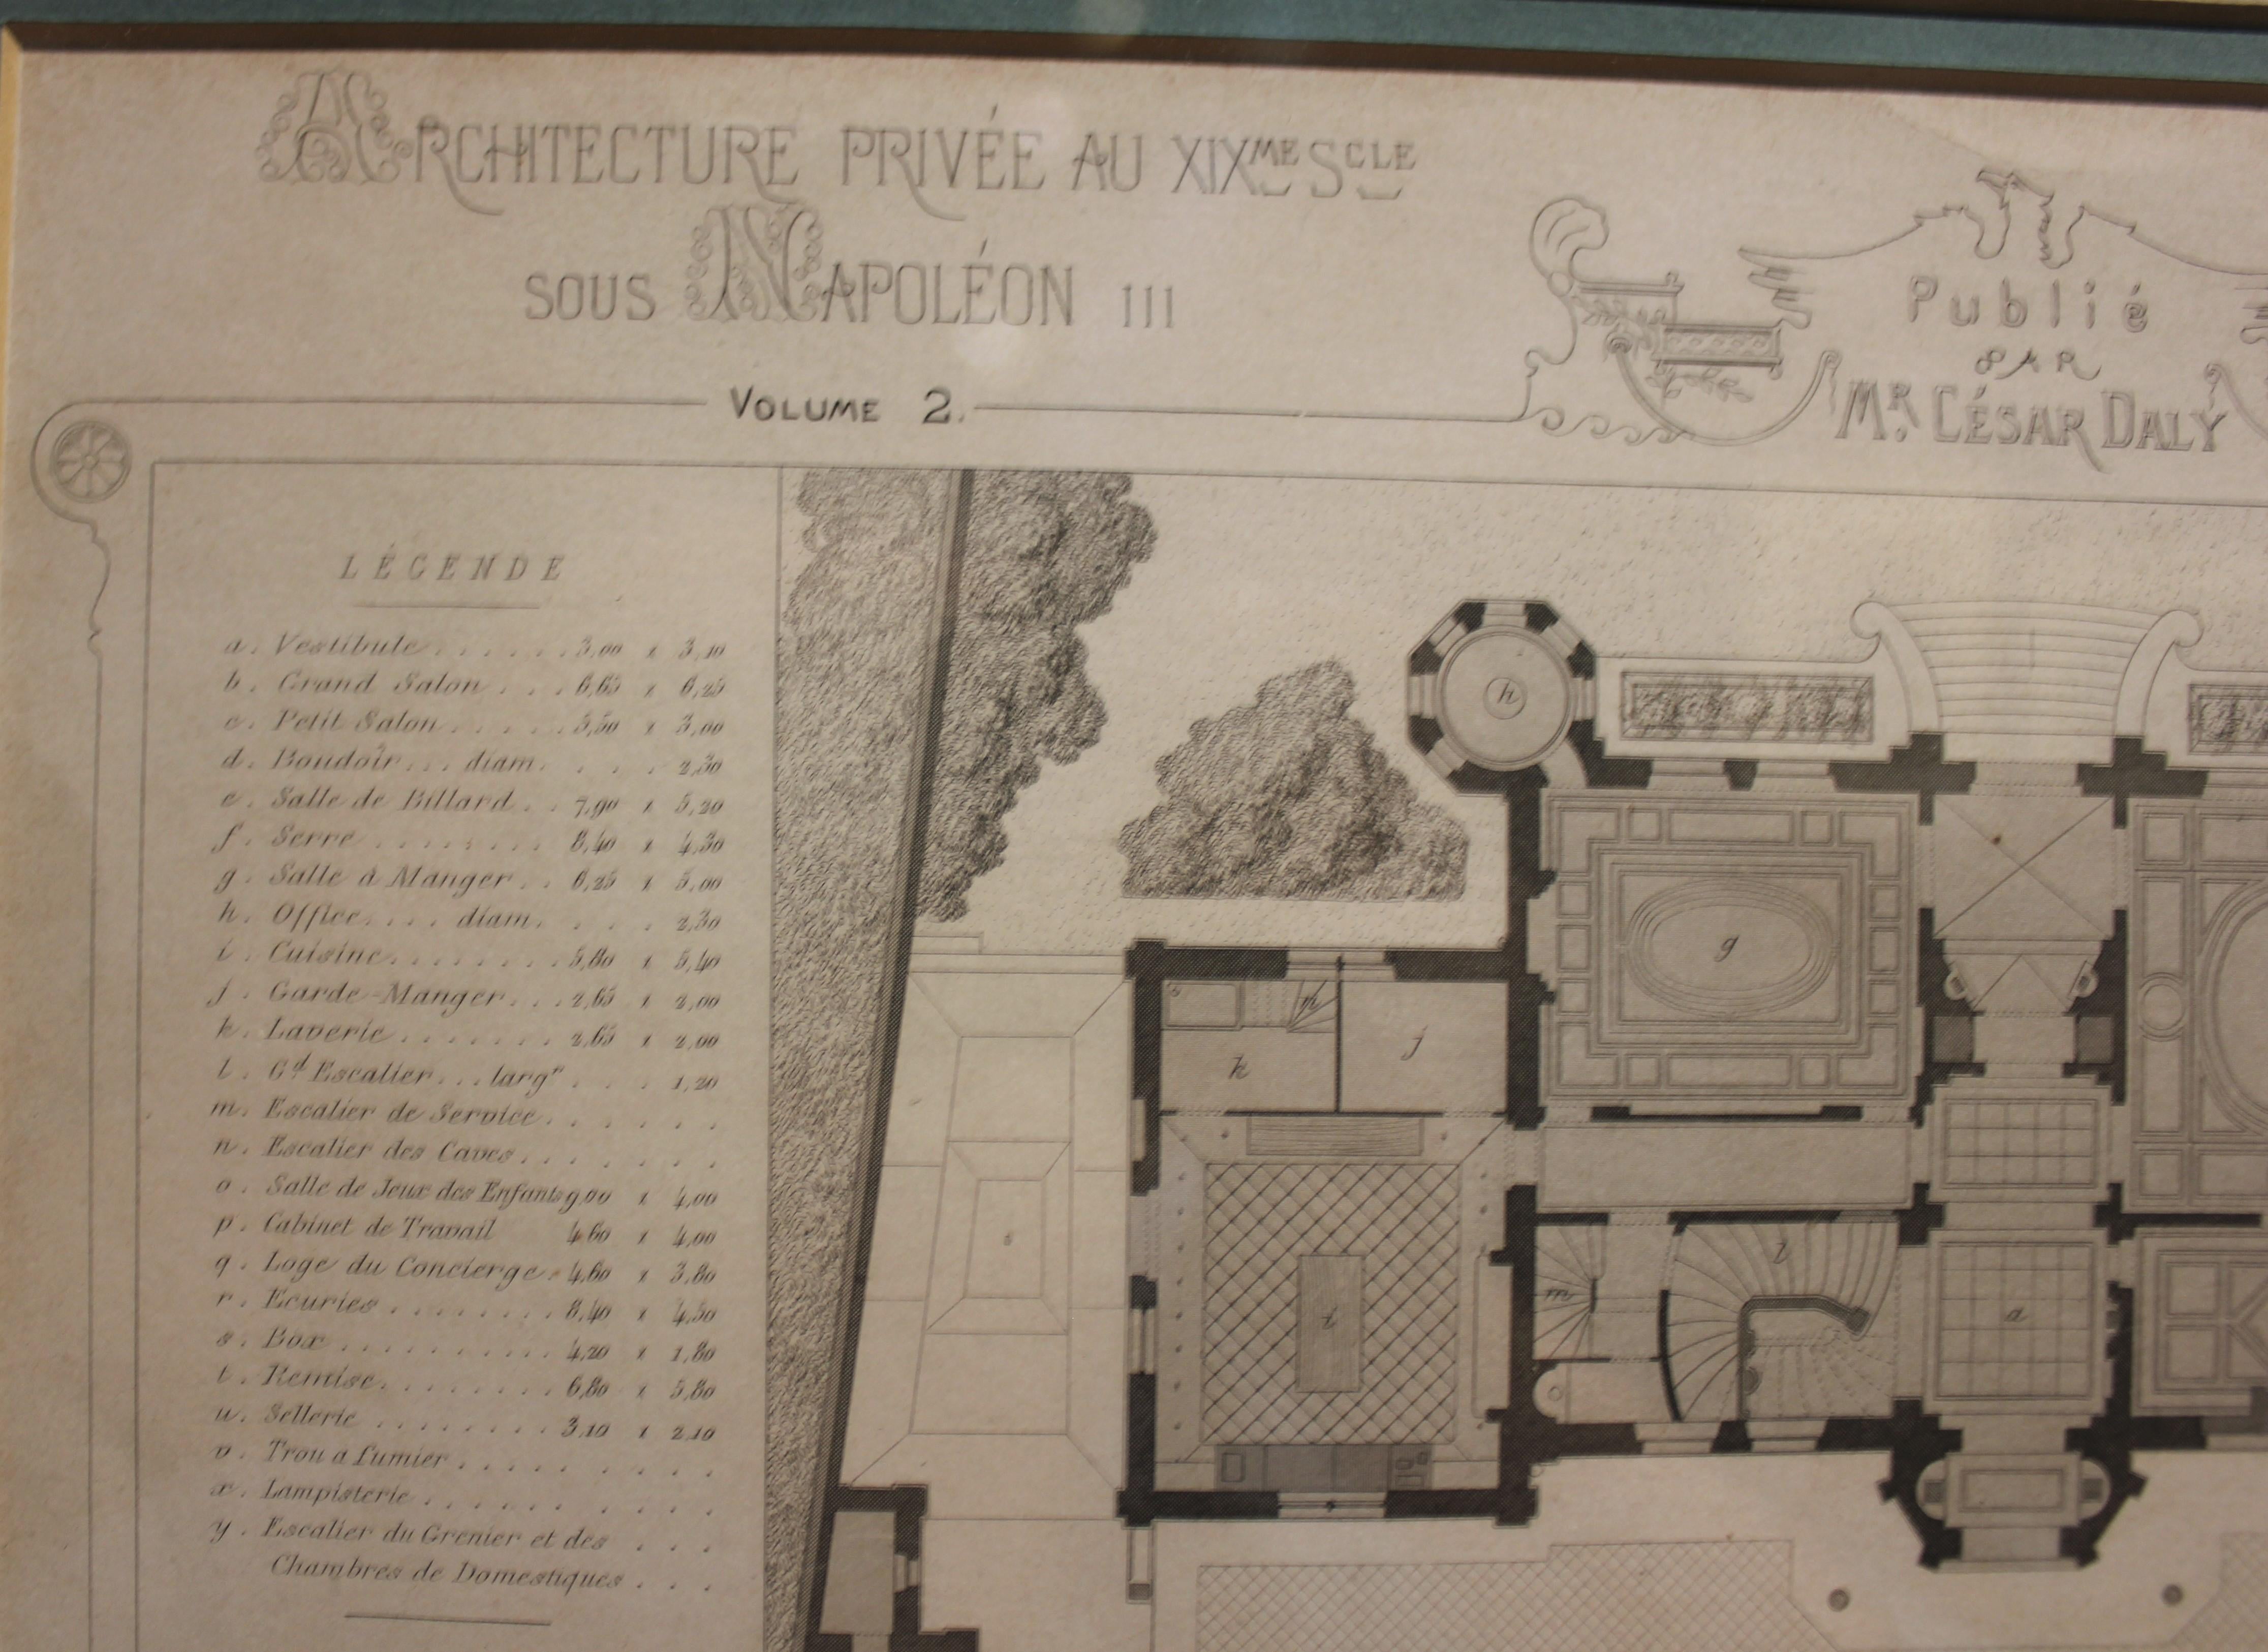 19th century floor plans